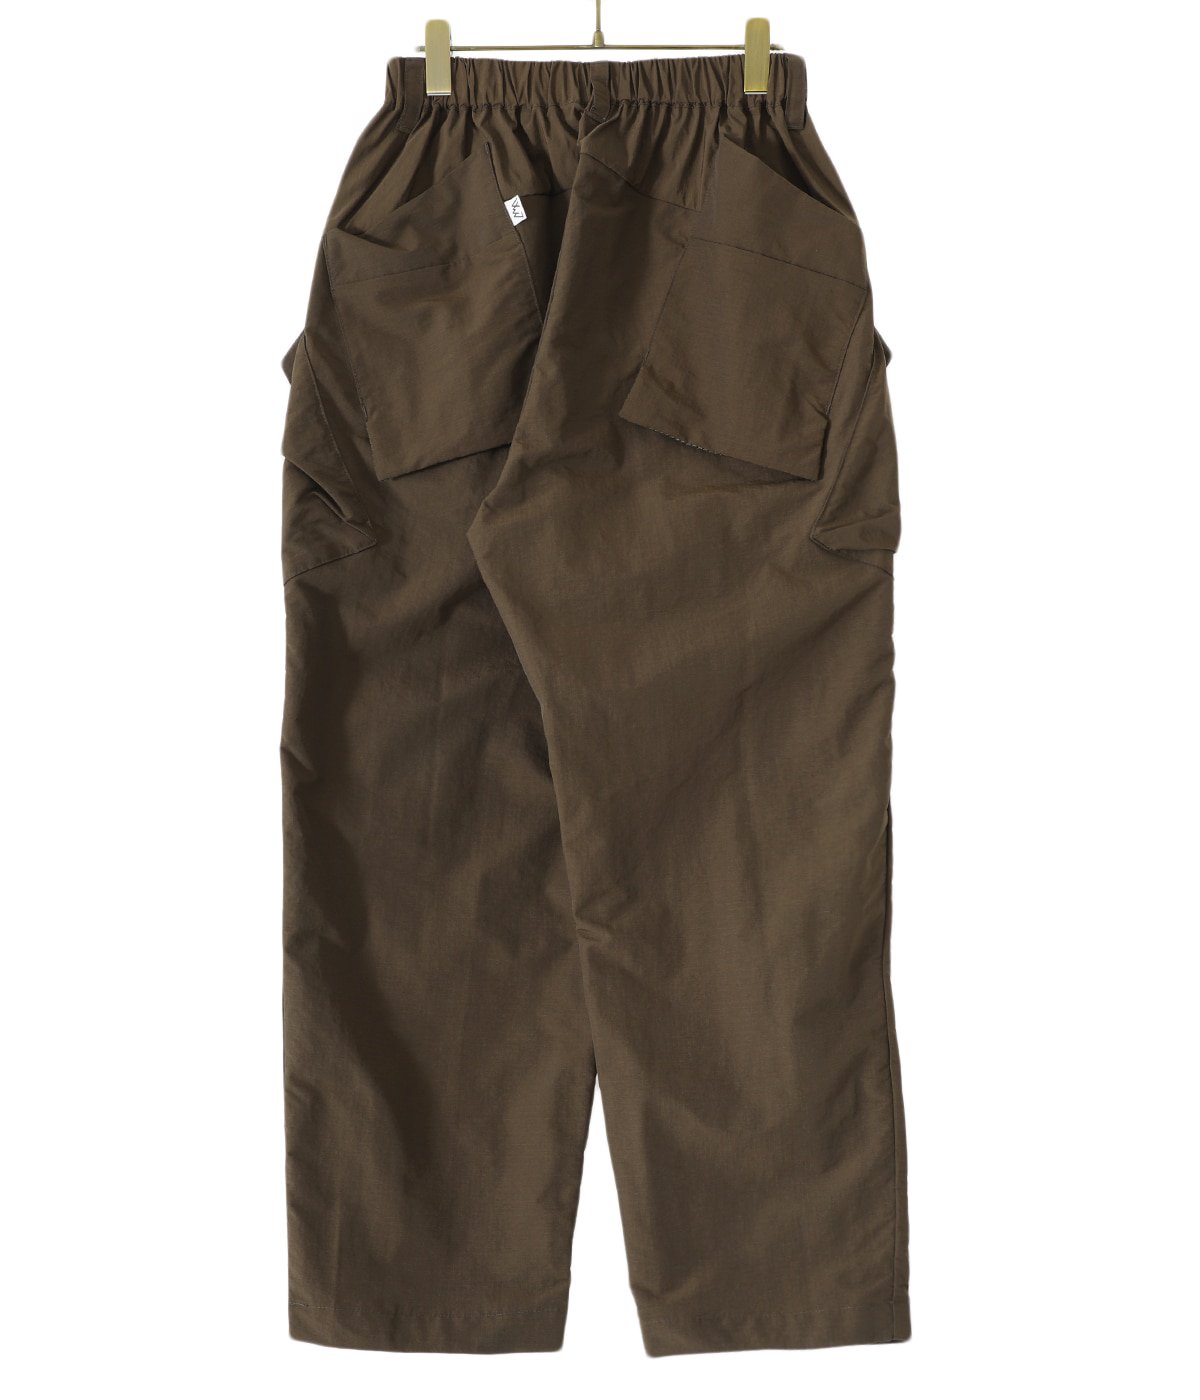 CMF Comfy Outdoor Garment - Prefuse Pants Nylon - Black